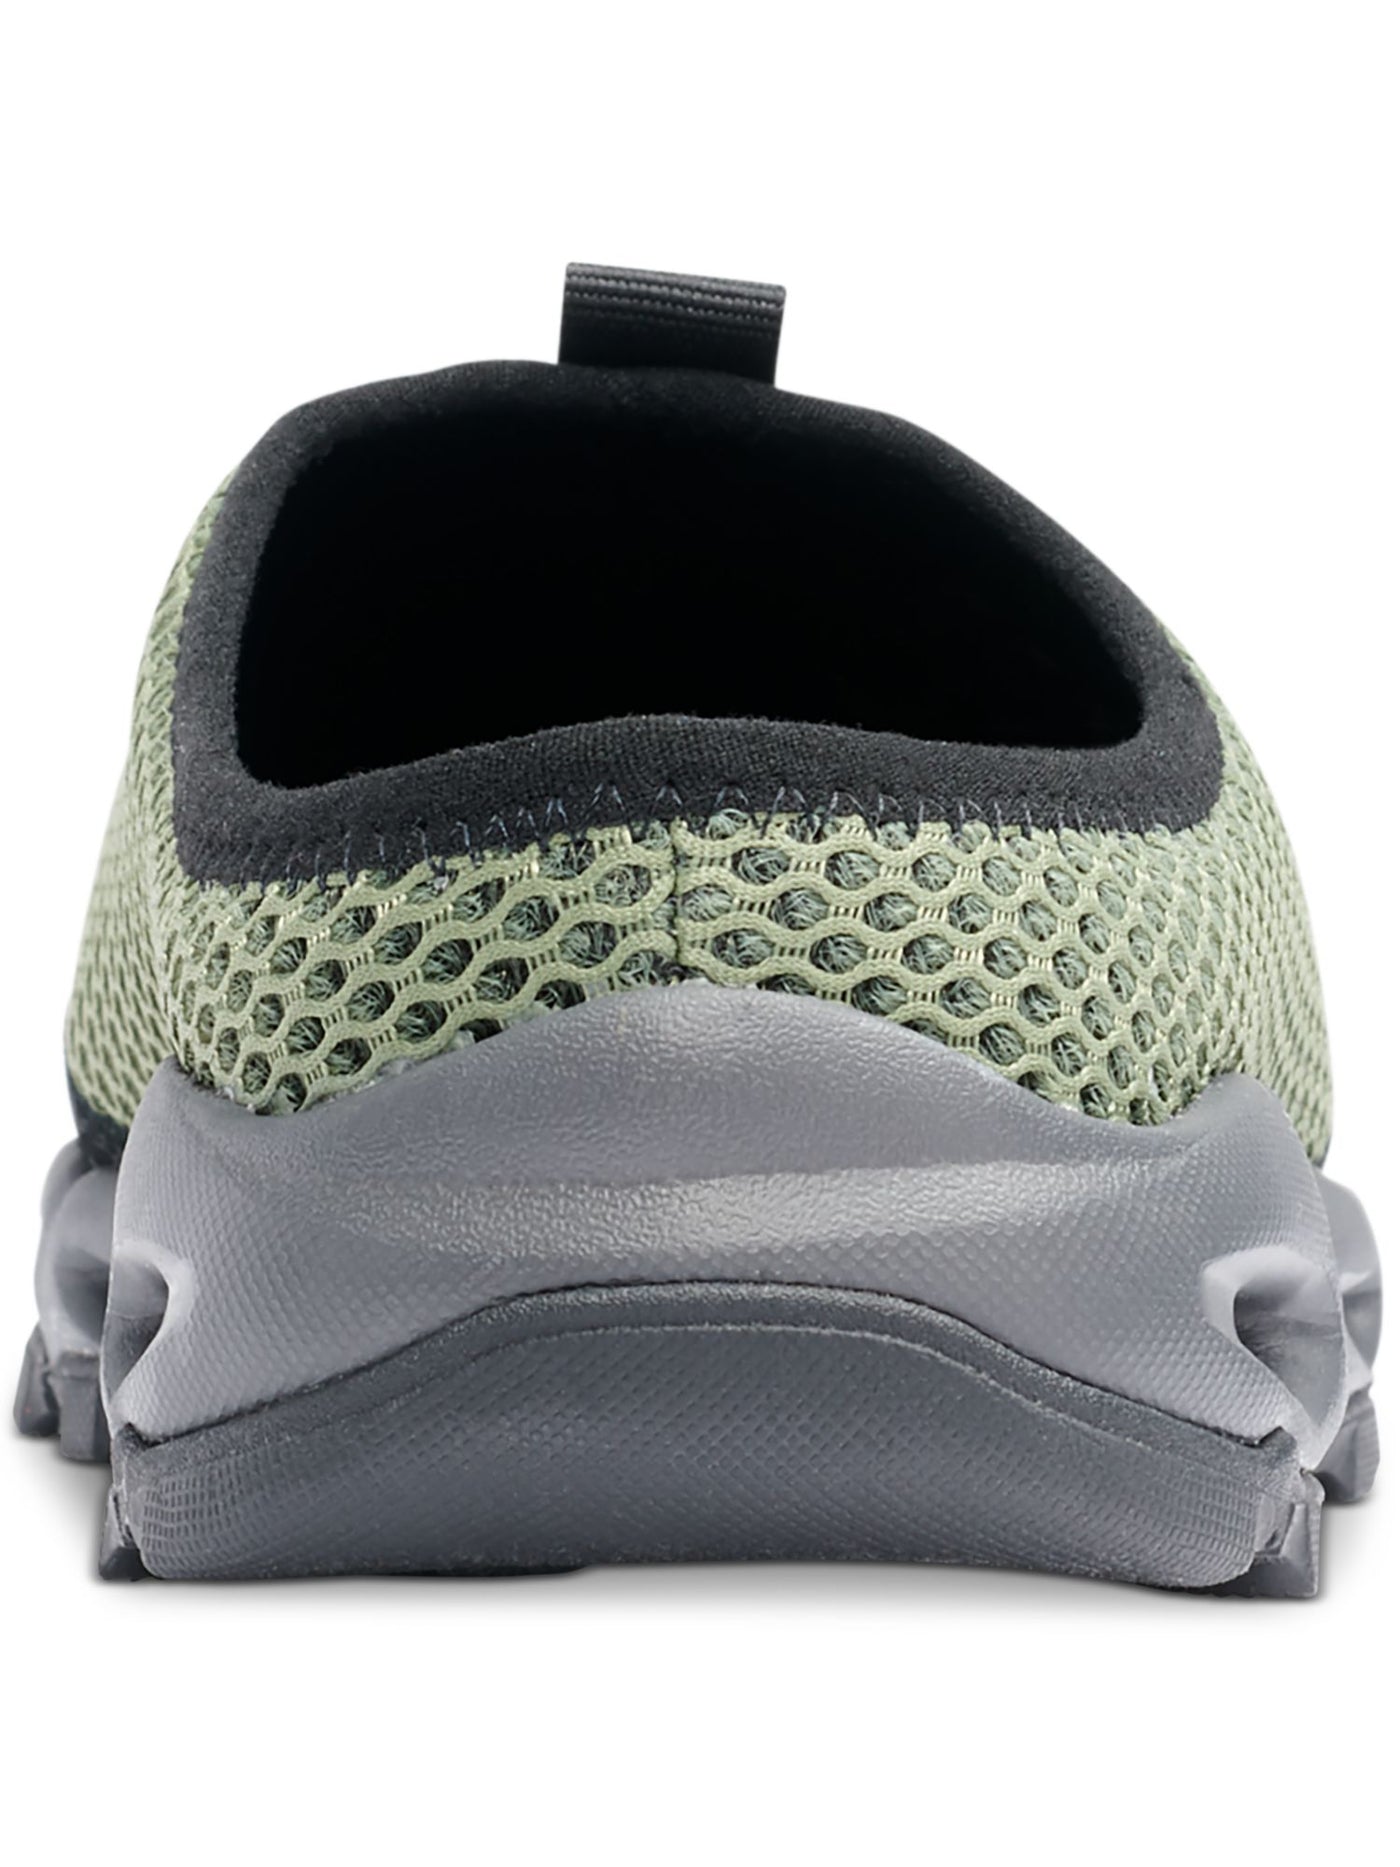 BASS OUTDOOR Womens Green Mixed Media Pull-Tab Cushioned Slip Resistant Aqua Round Toe Slip On Mules 8.5 M